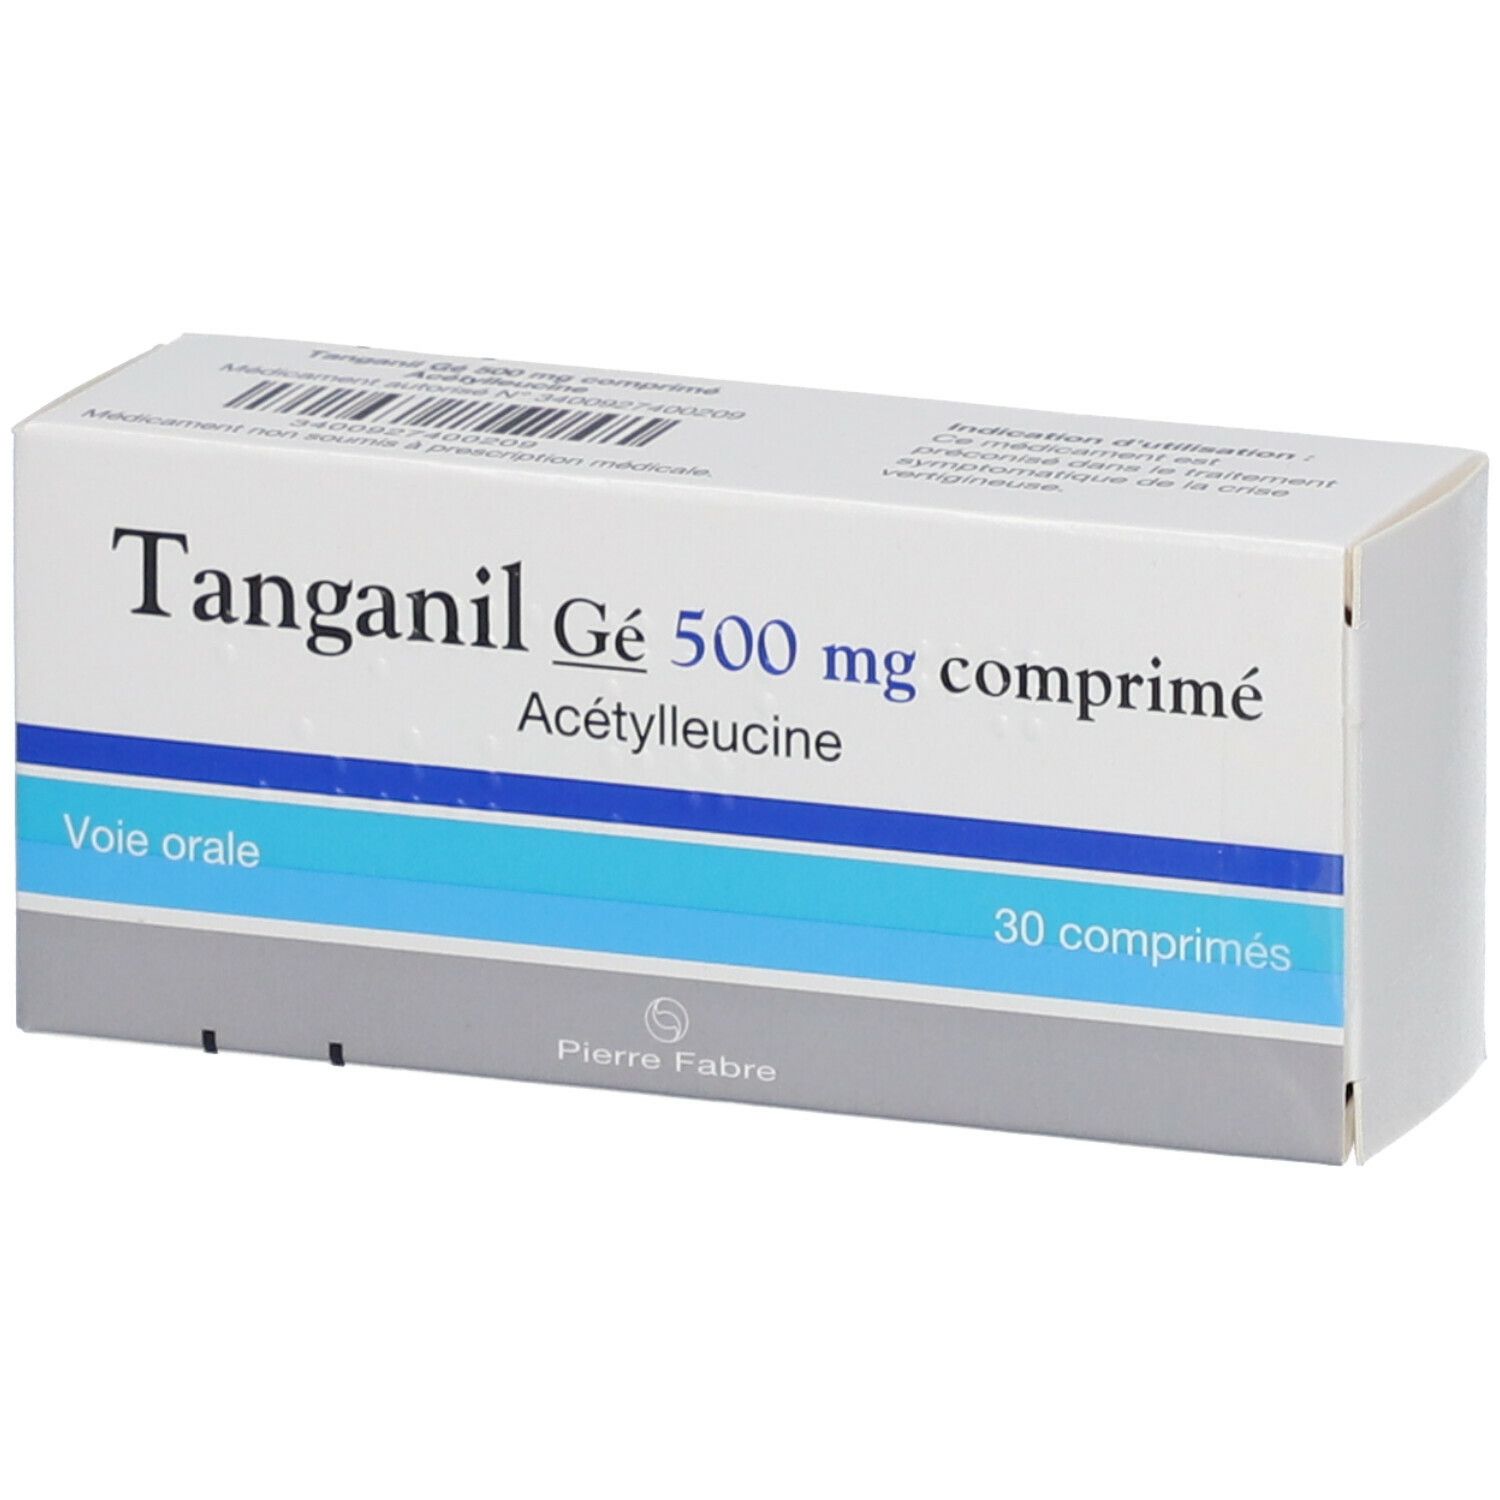 Pierre Fabre Tanganil Gé 500 mg